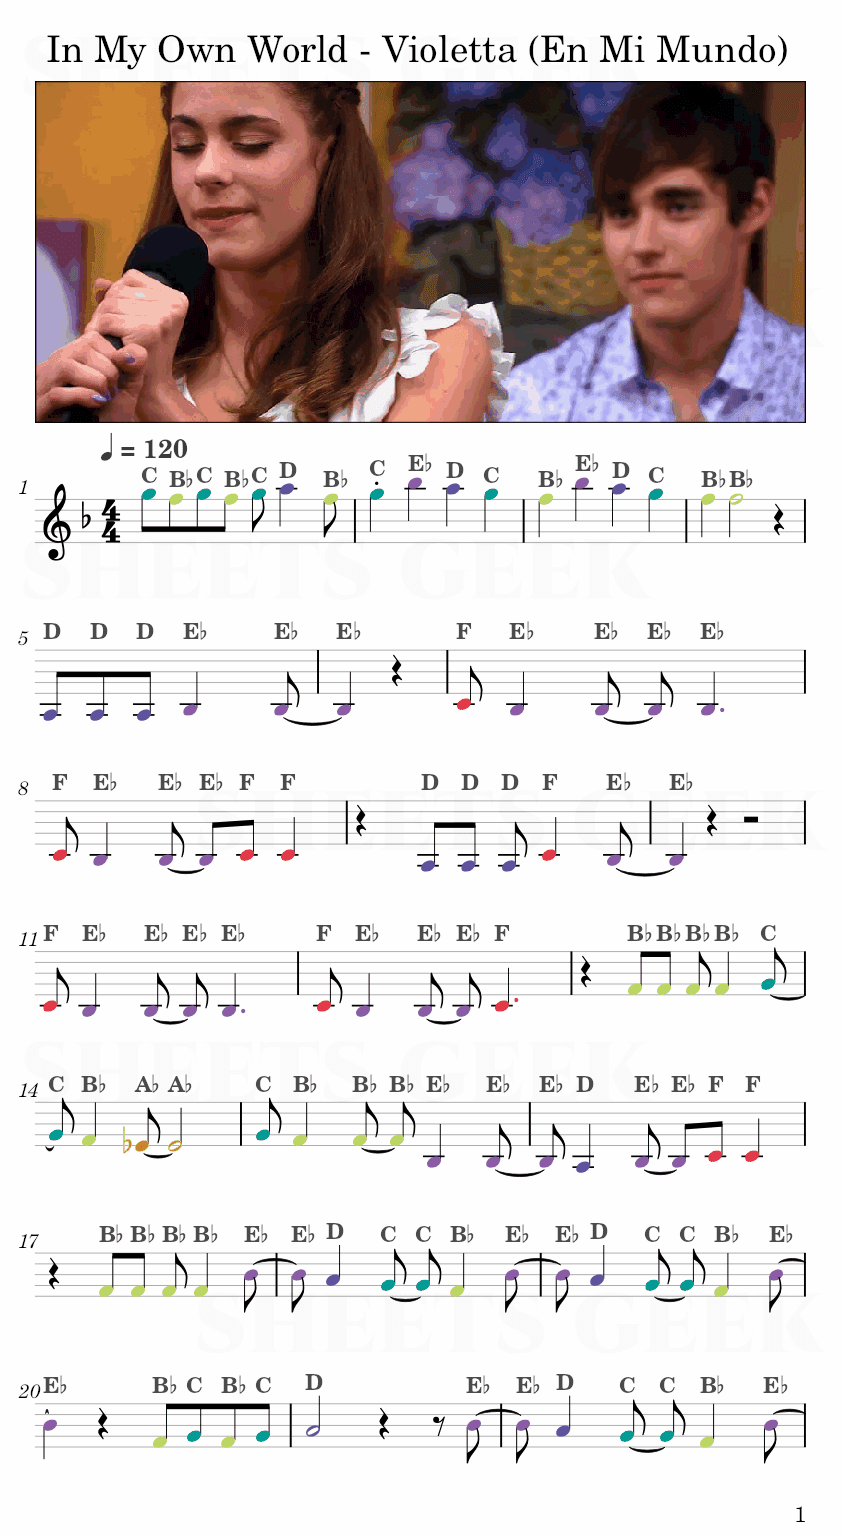 In My Own World - Violetta (En Mi Mundo) Easy Sheet Music Free for piano, keyboard, flute, violin, sax, cello page 1